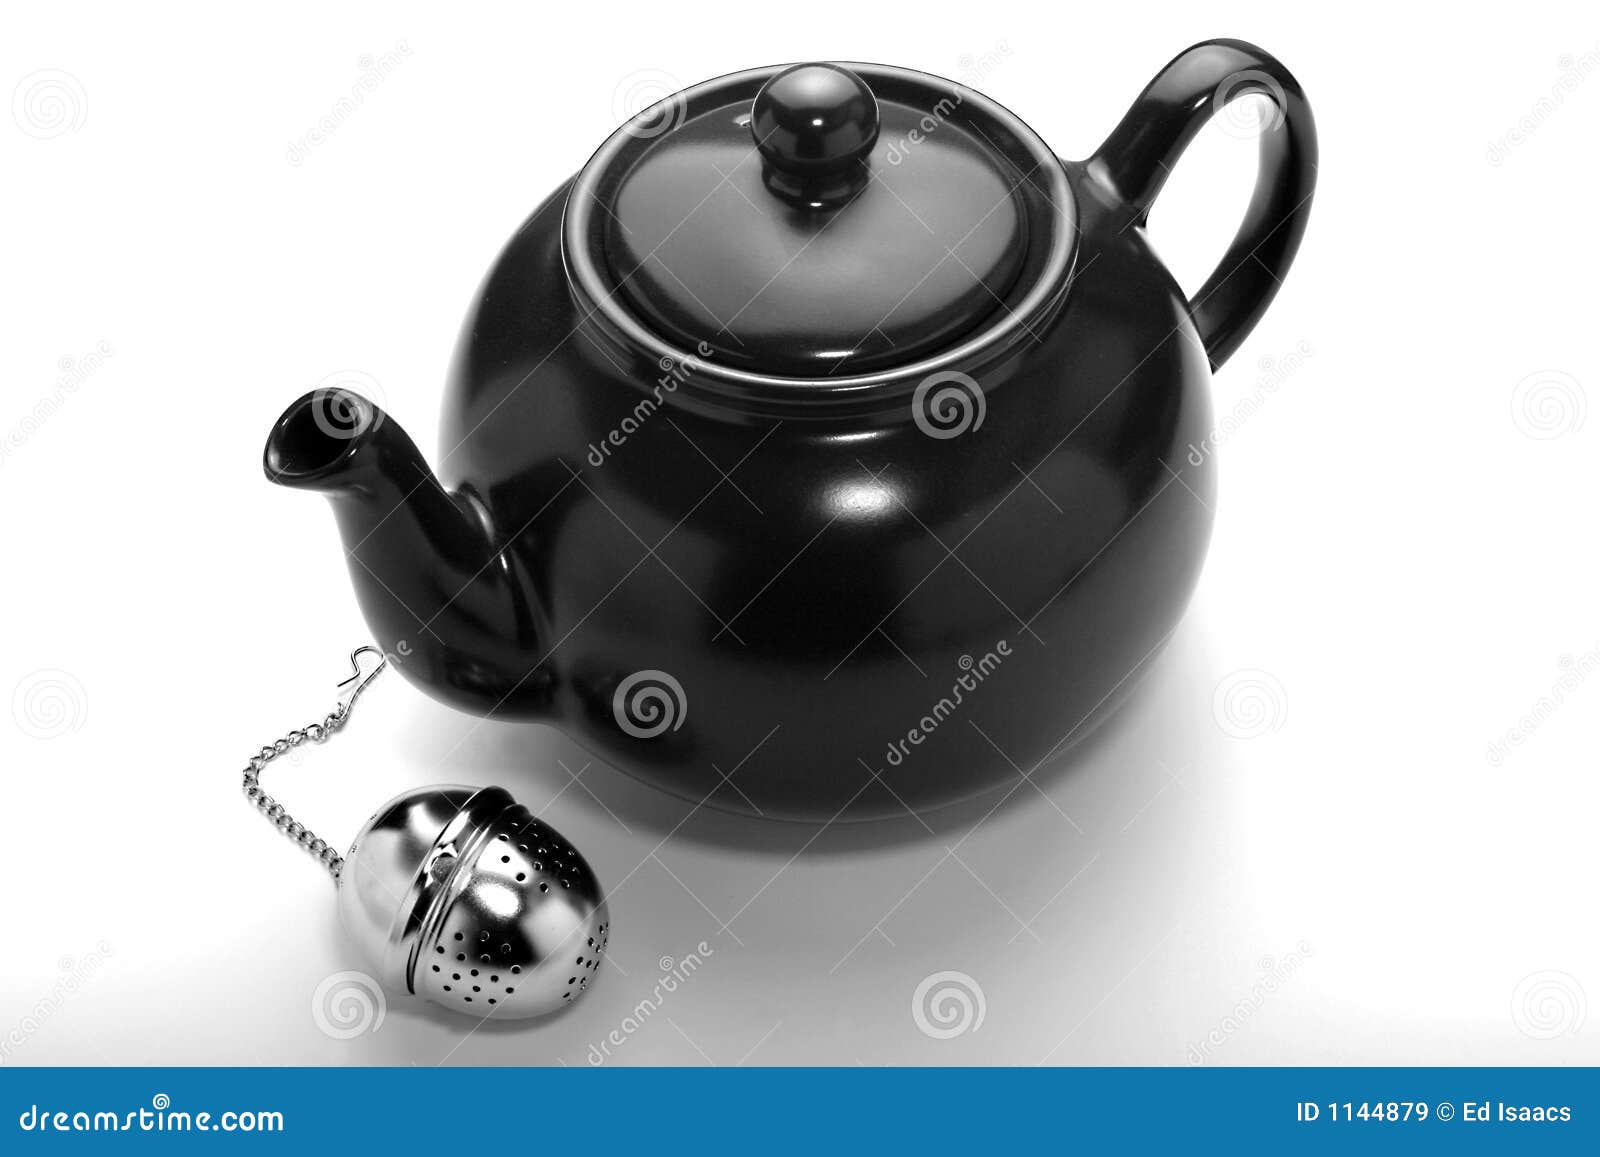 https://thumbs.dreamstime.com/z/black-teapot-1144879.jpg